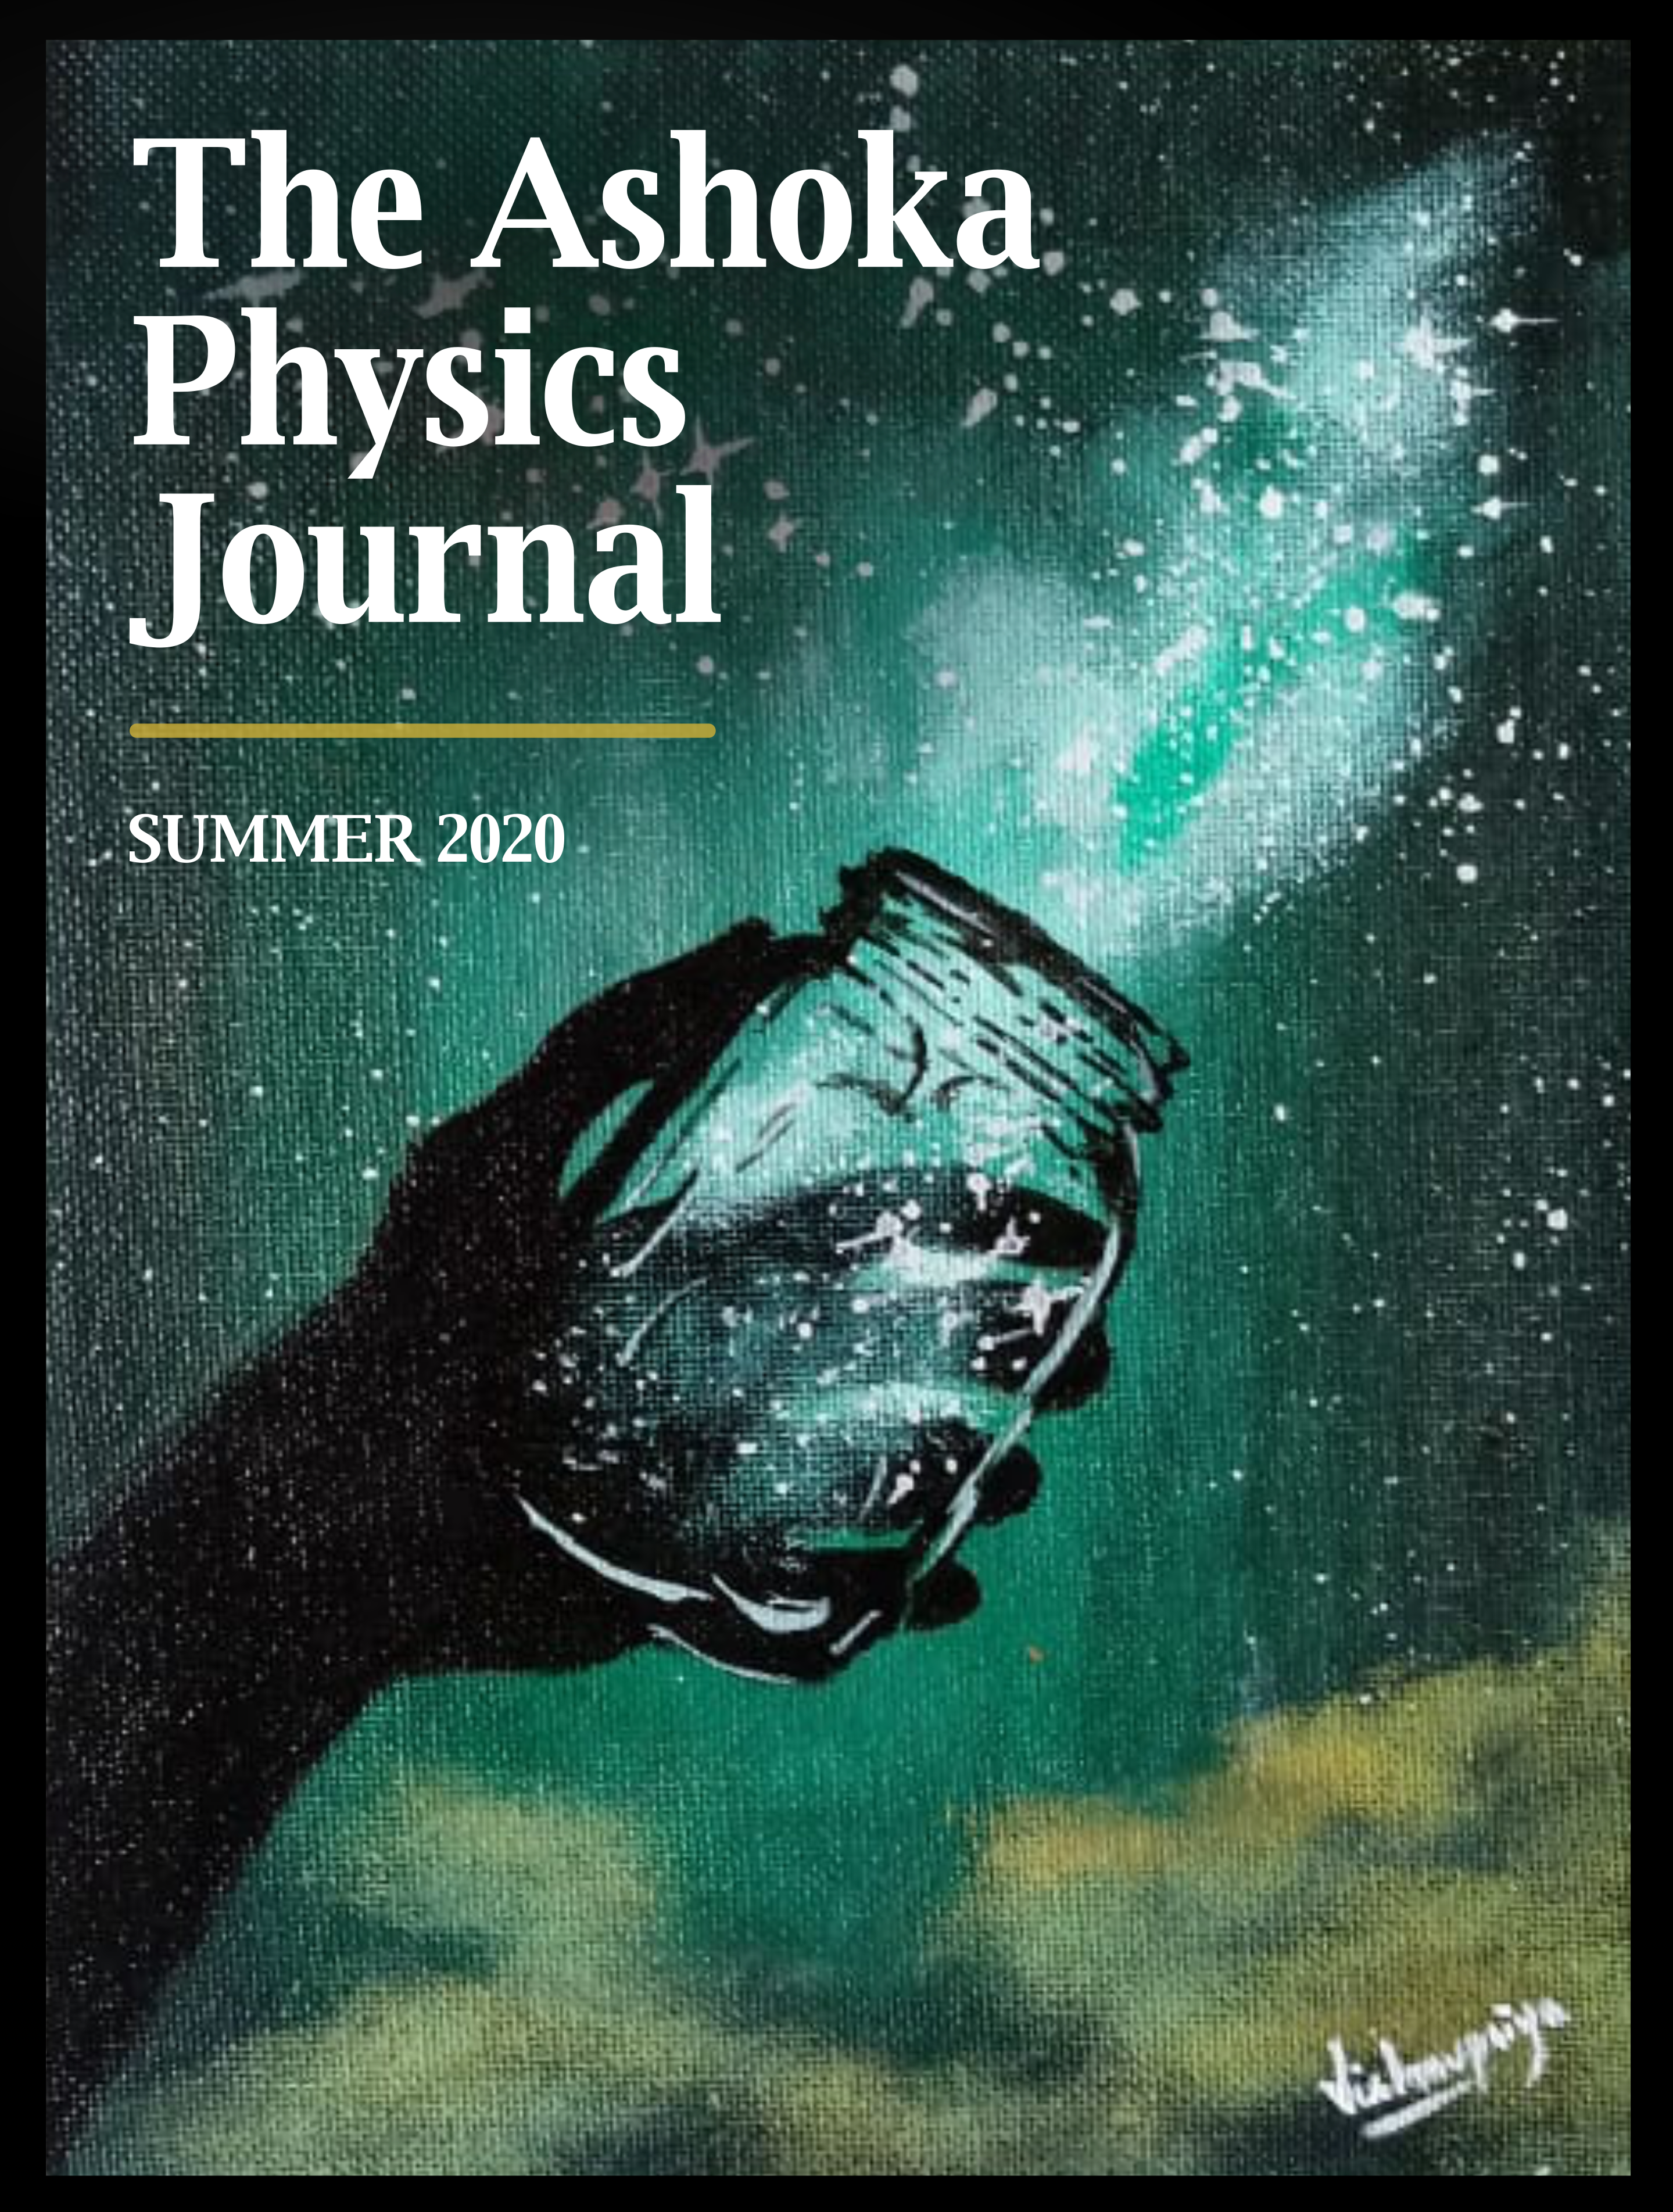 The Ashoka Physics Journal, Summer 2020